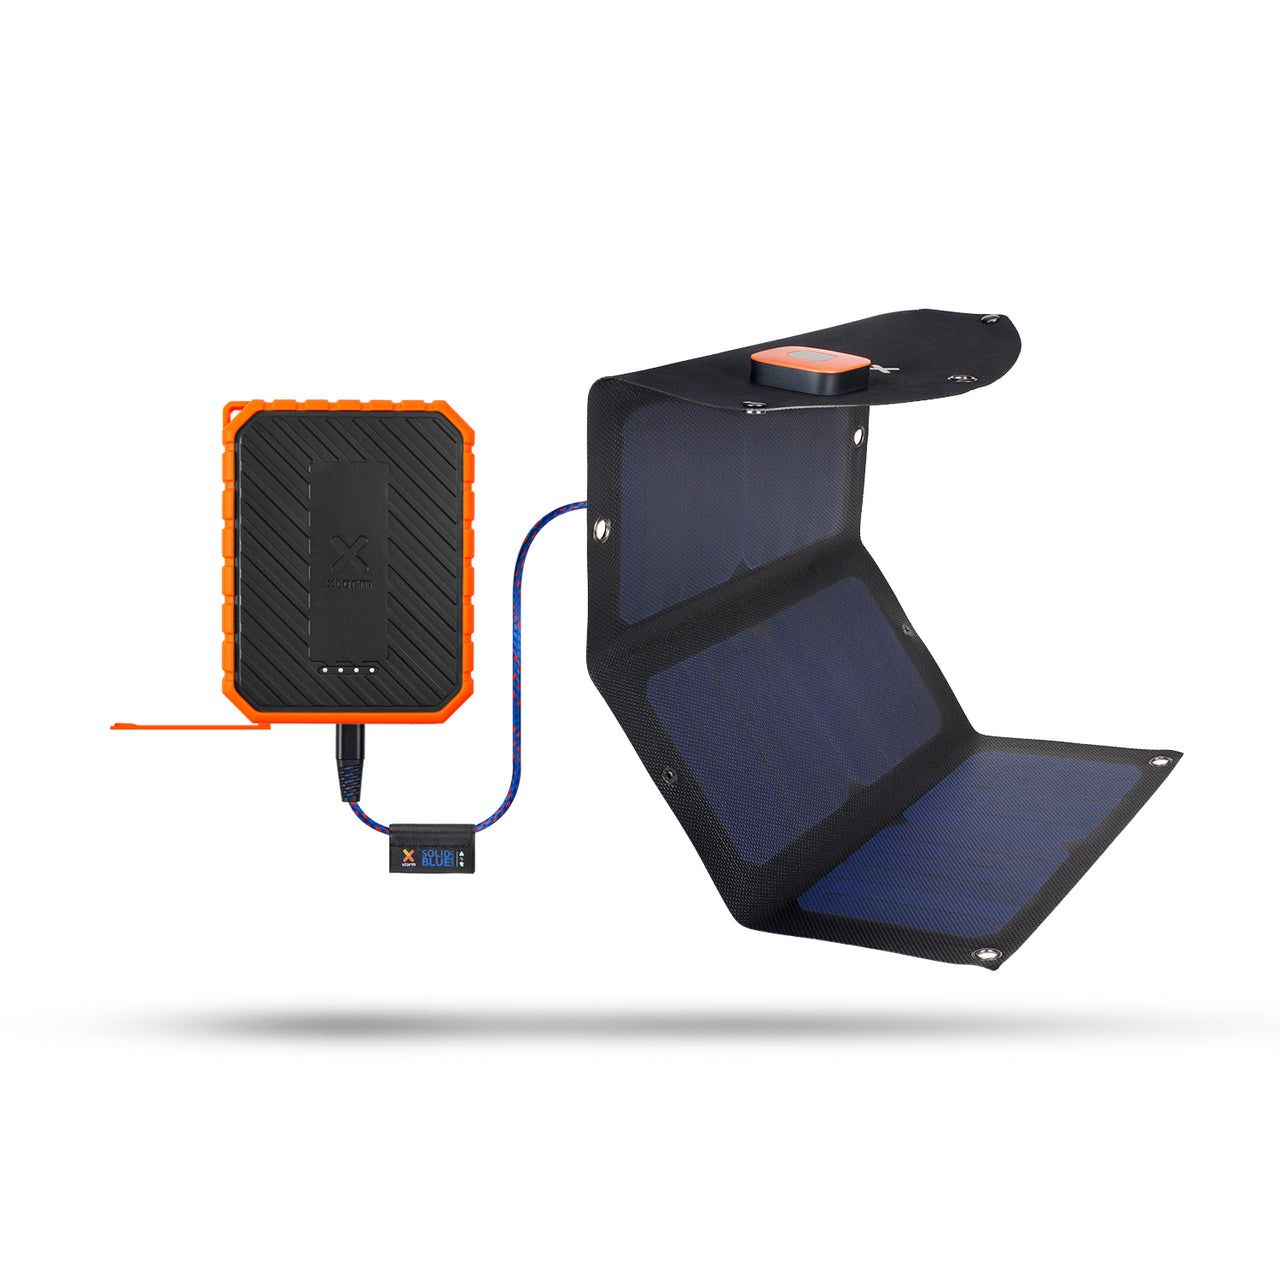 Xtreme Solar Panel SolarBooster - 21W